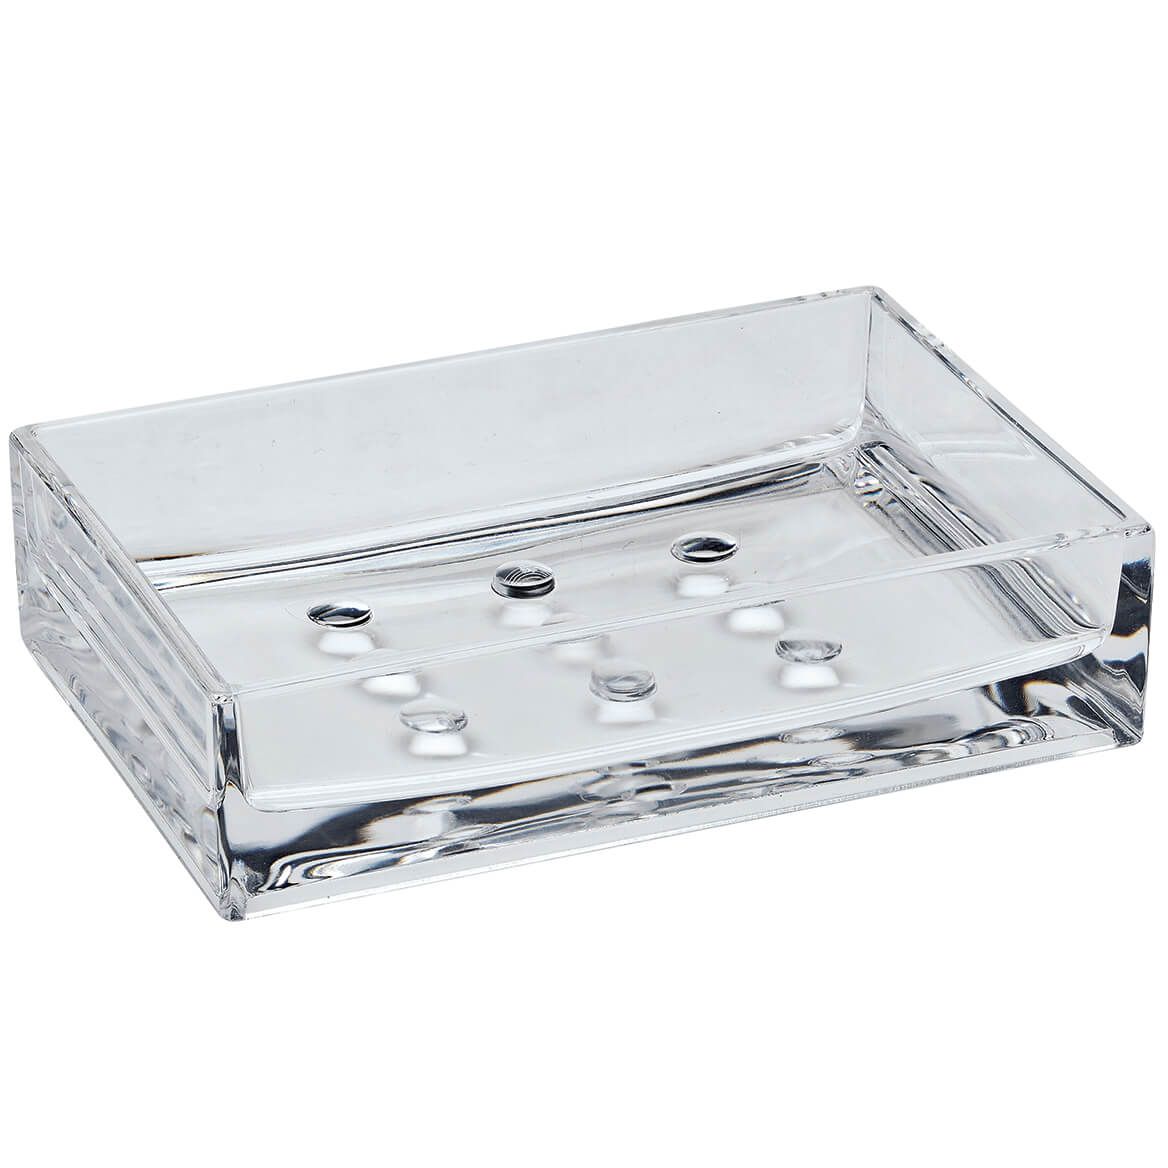 Rectangular Clear Acrylic Soap Dish + '-' + 373259